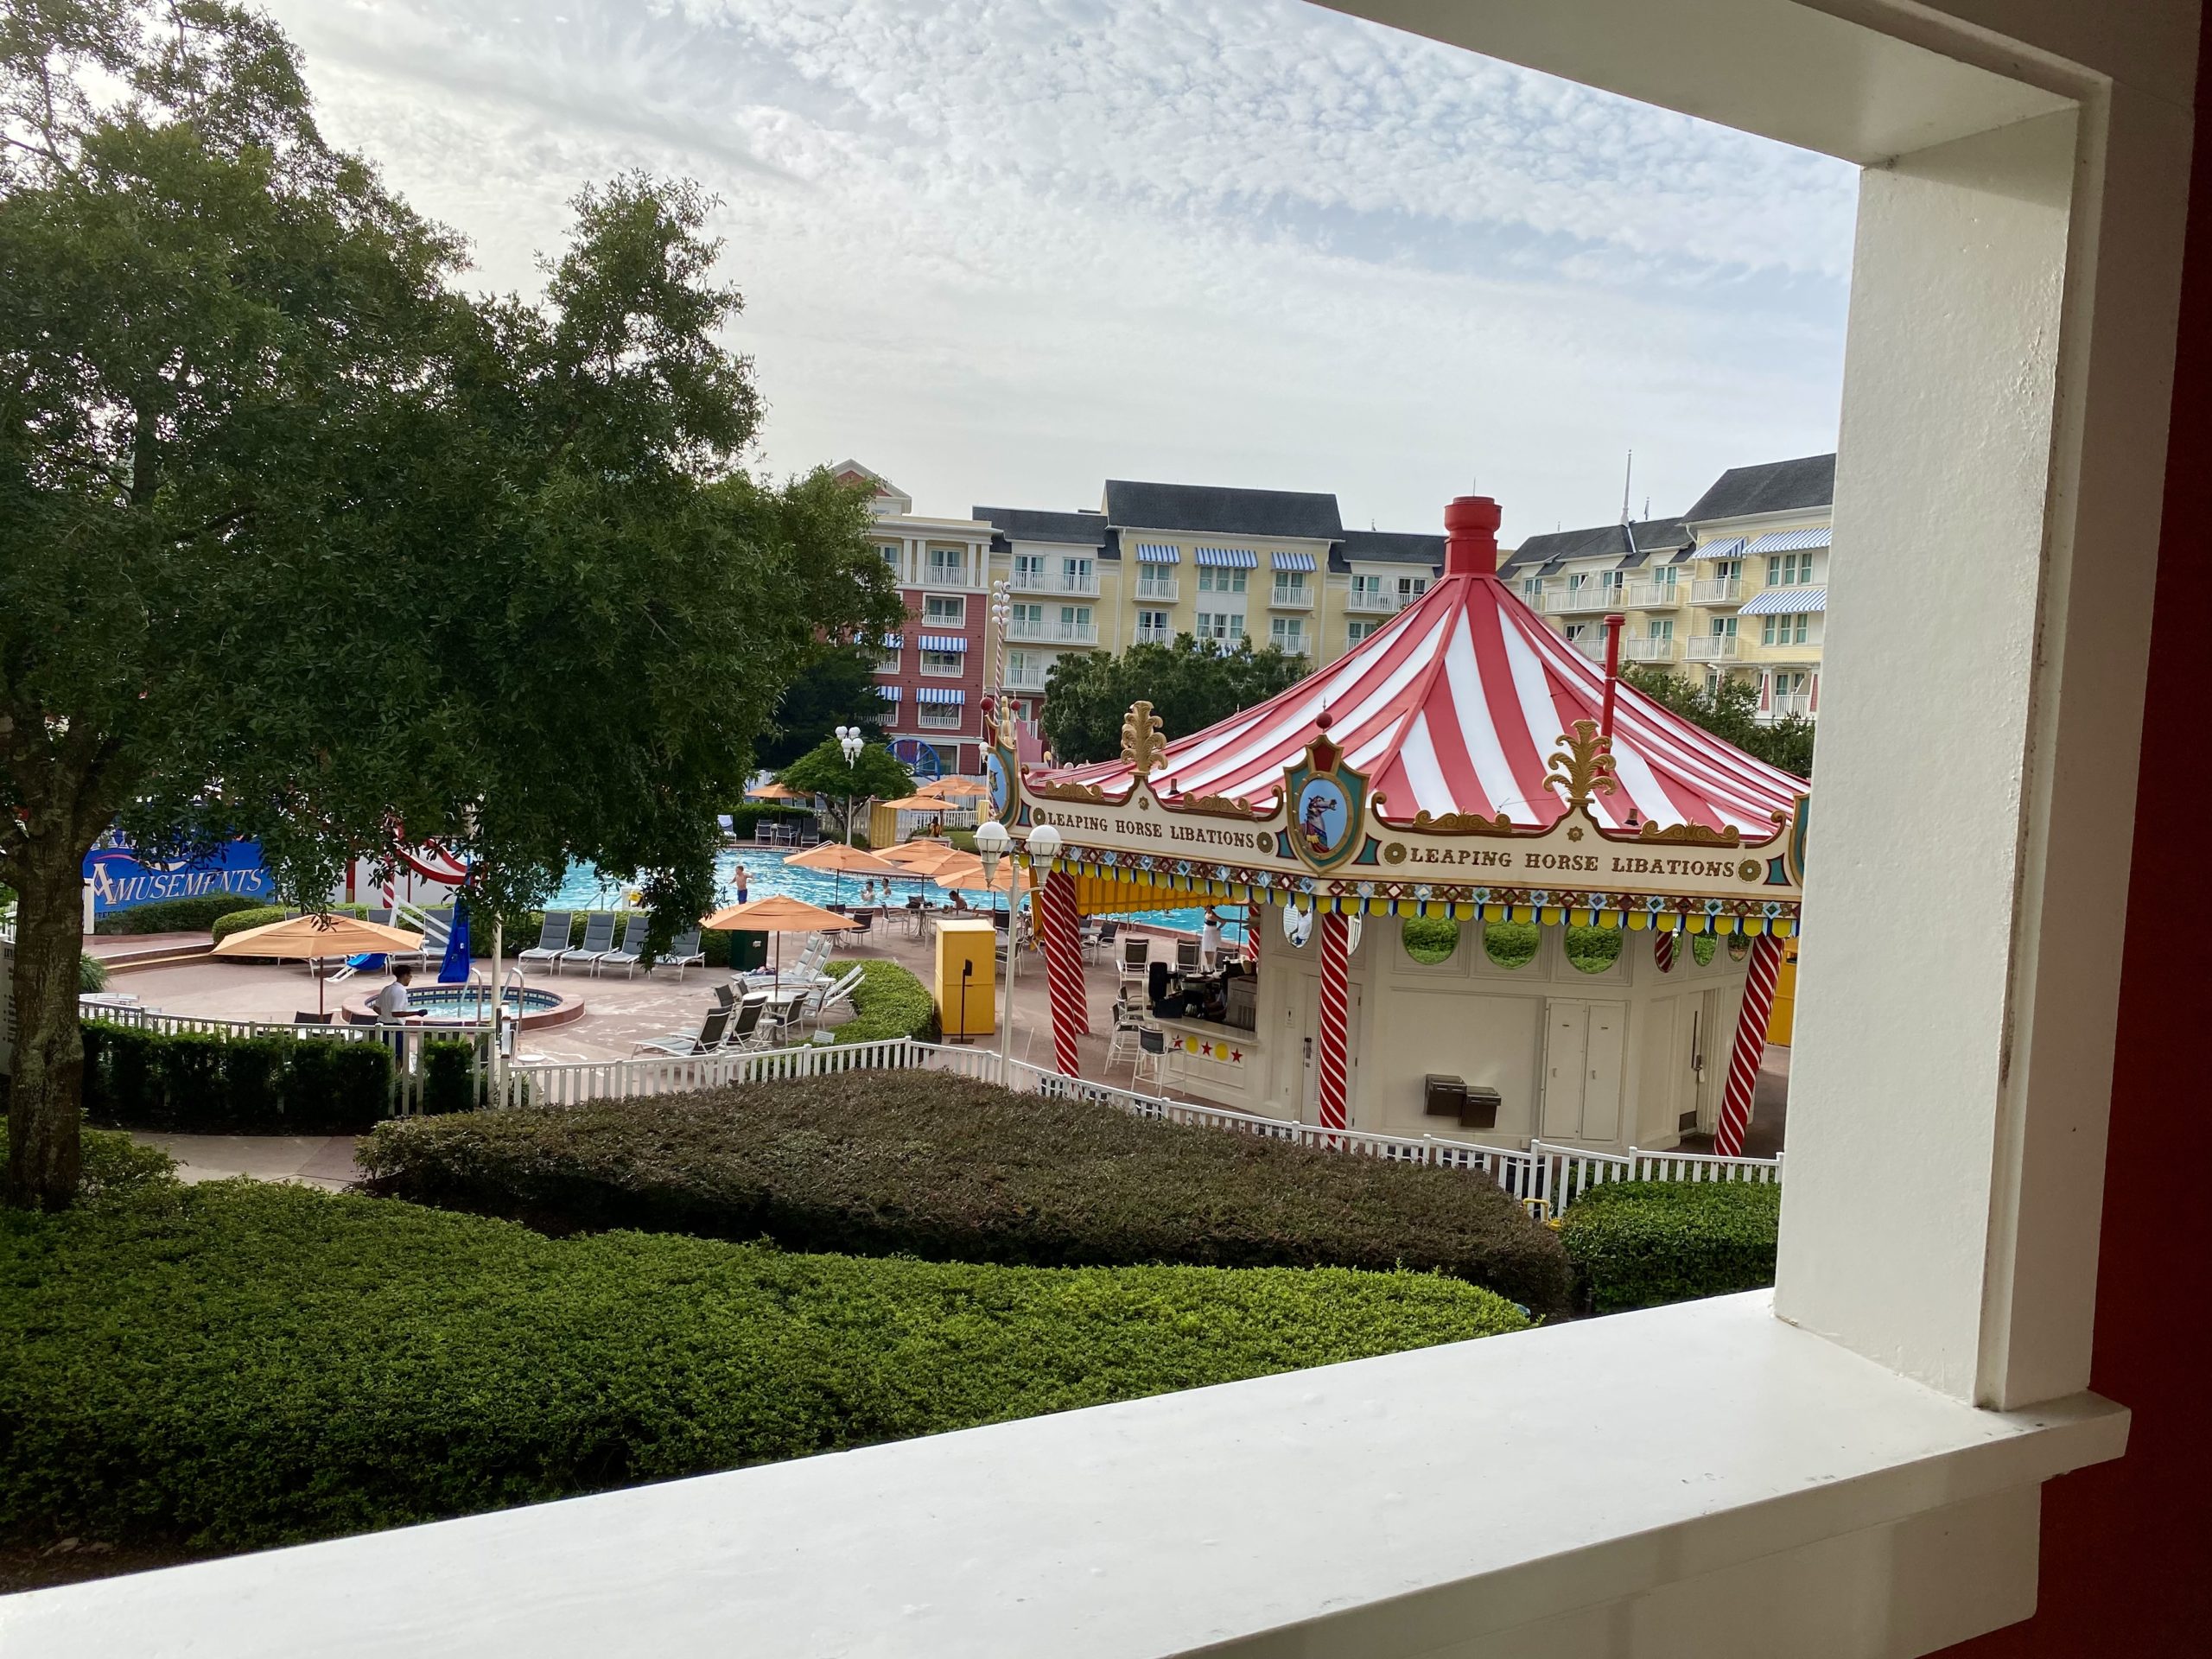 a carousel in a park